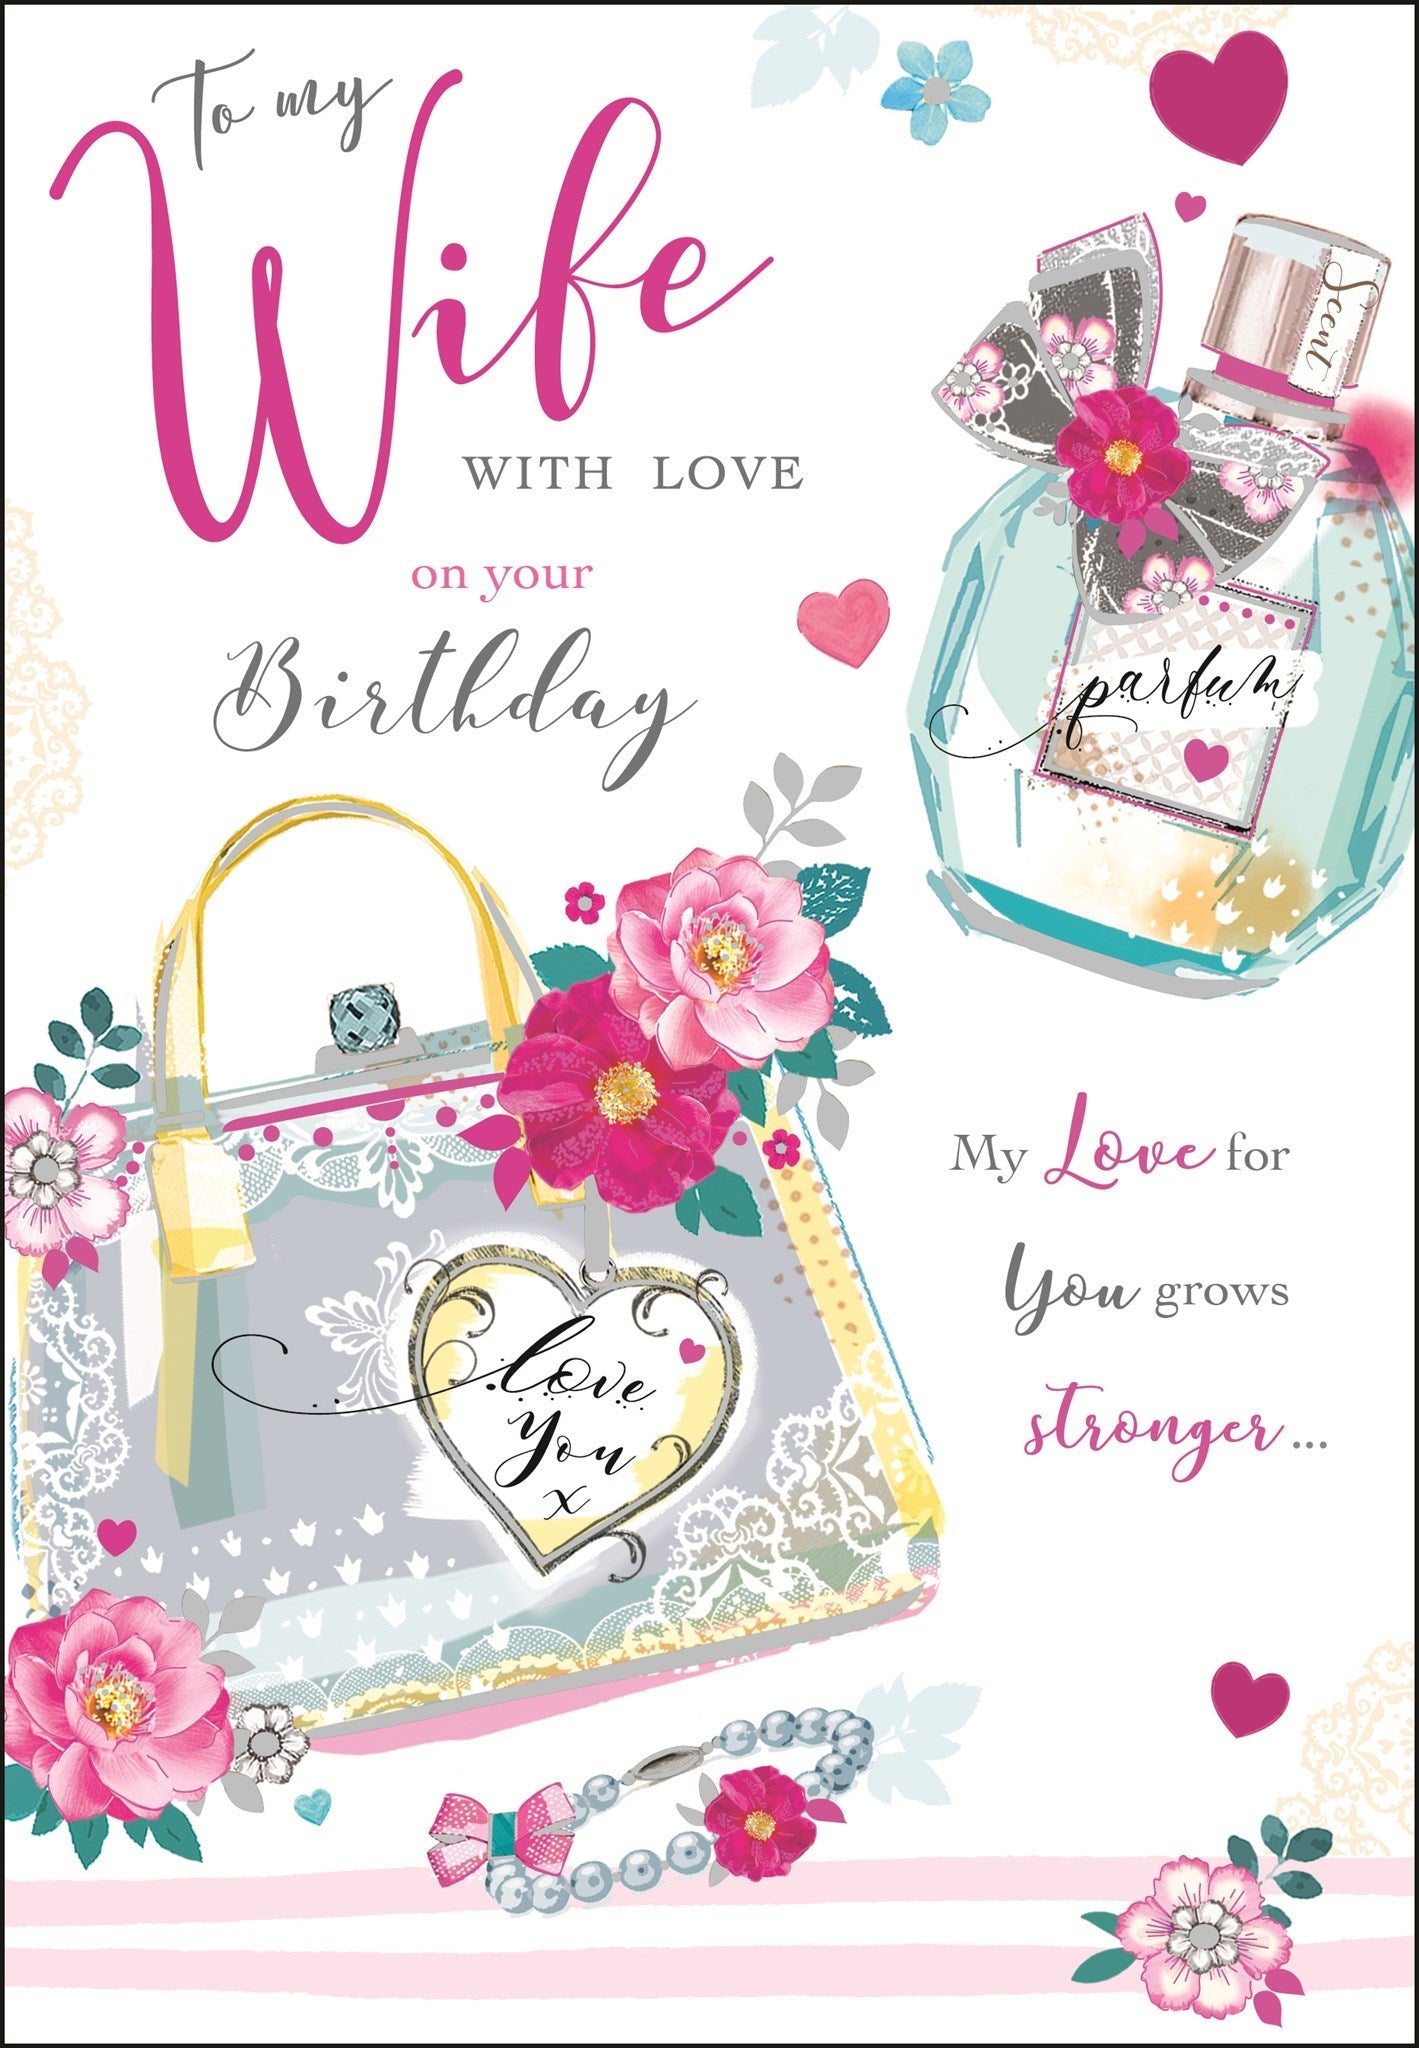 Wife Birthday Card - Fragrance Of Love